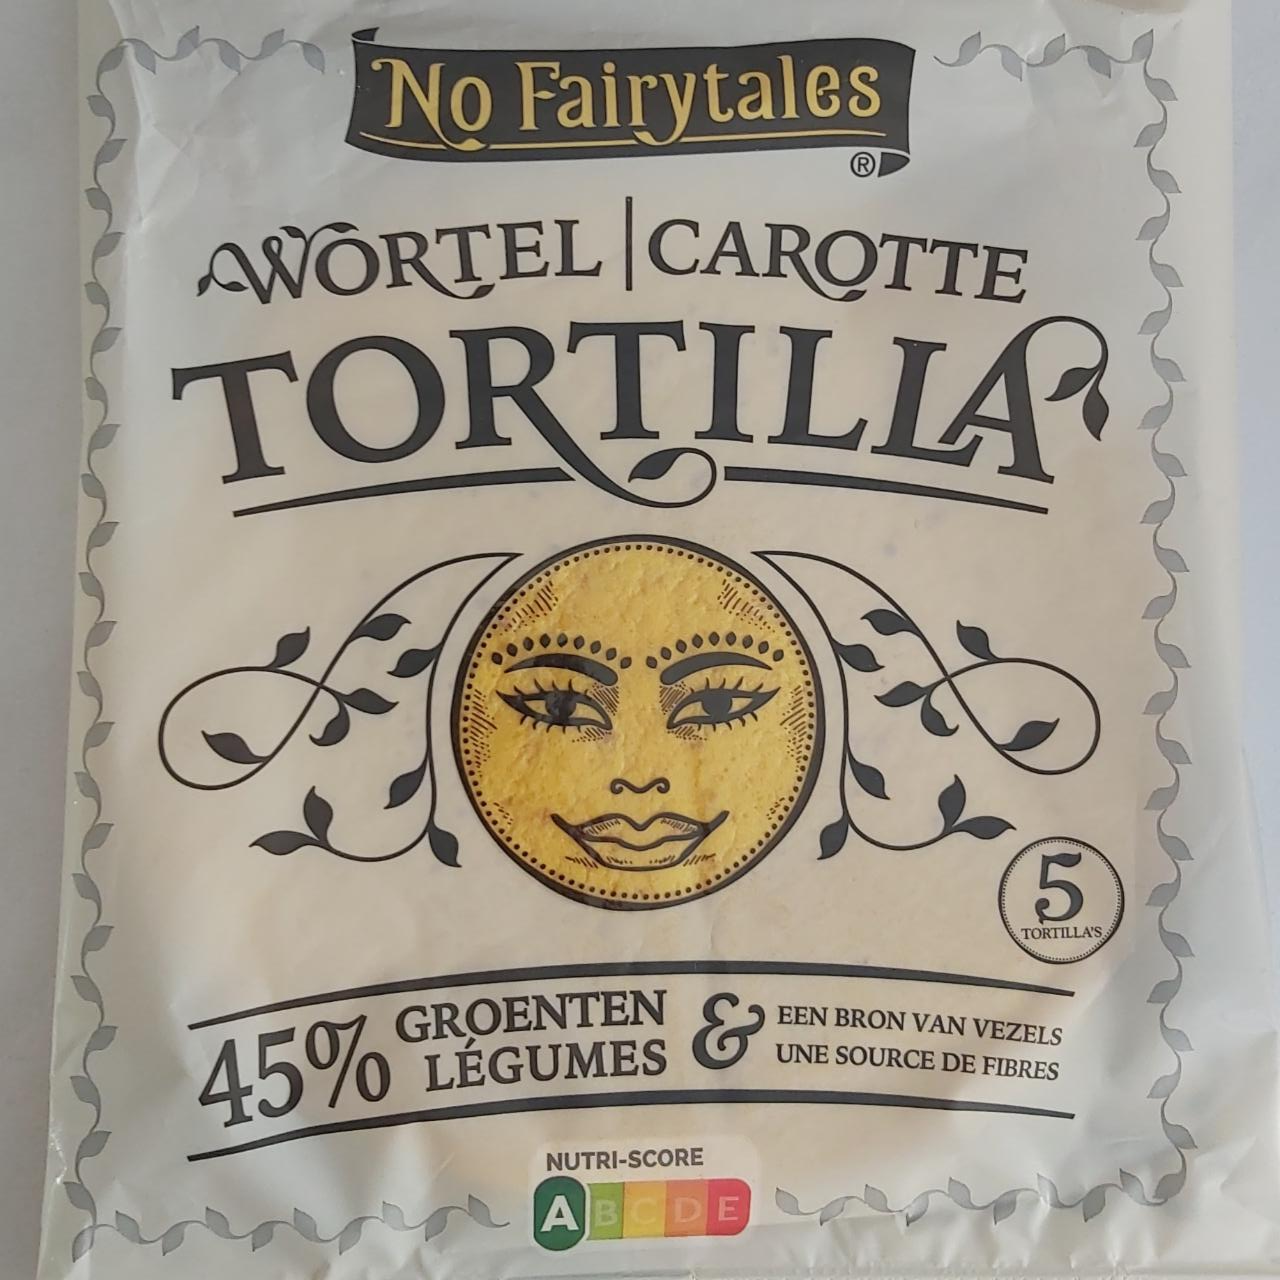 Fotografie - Wortel/carotte tortilla